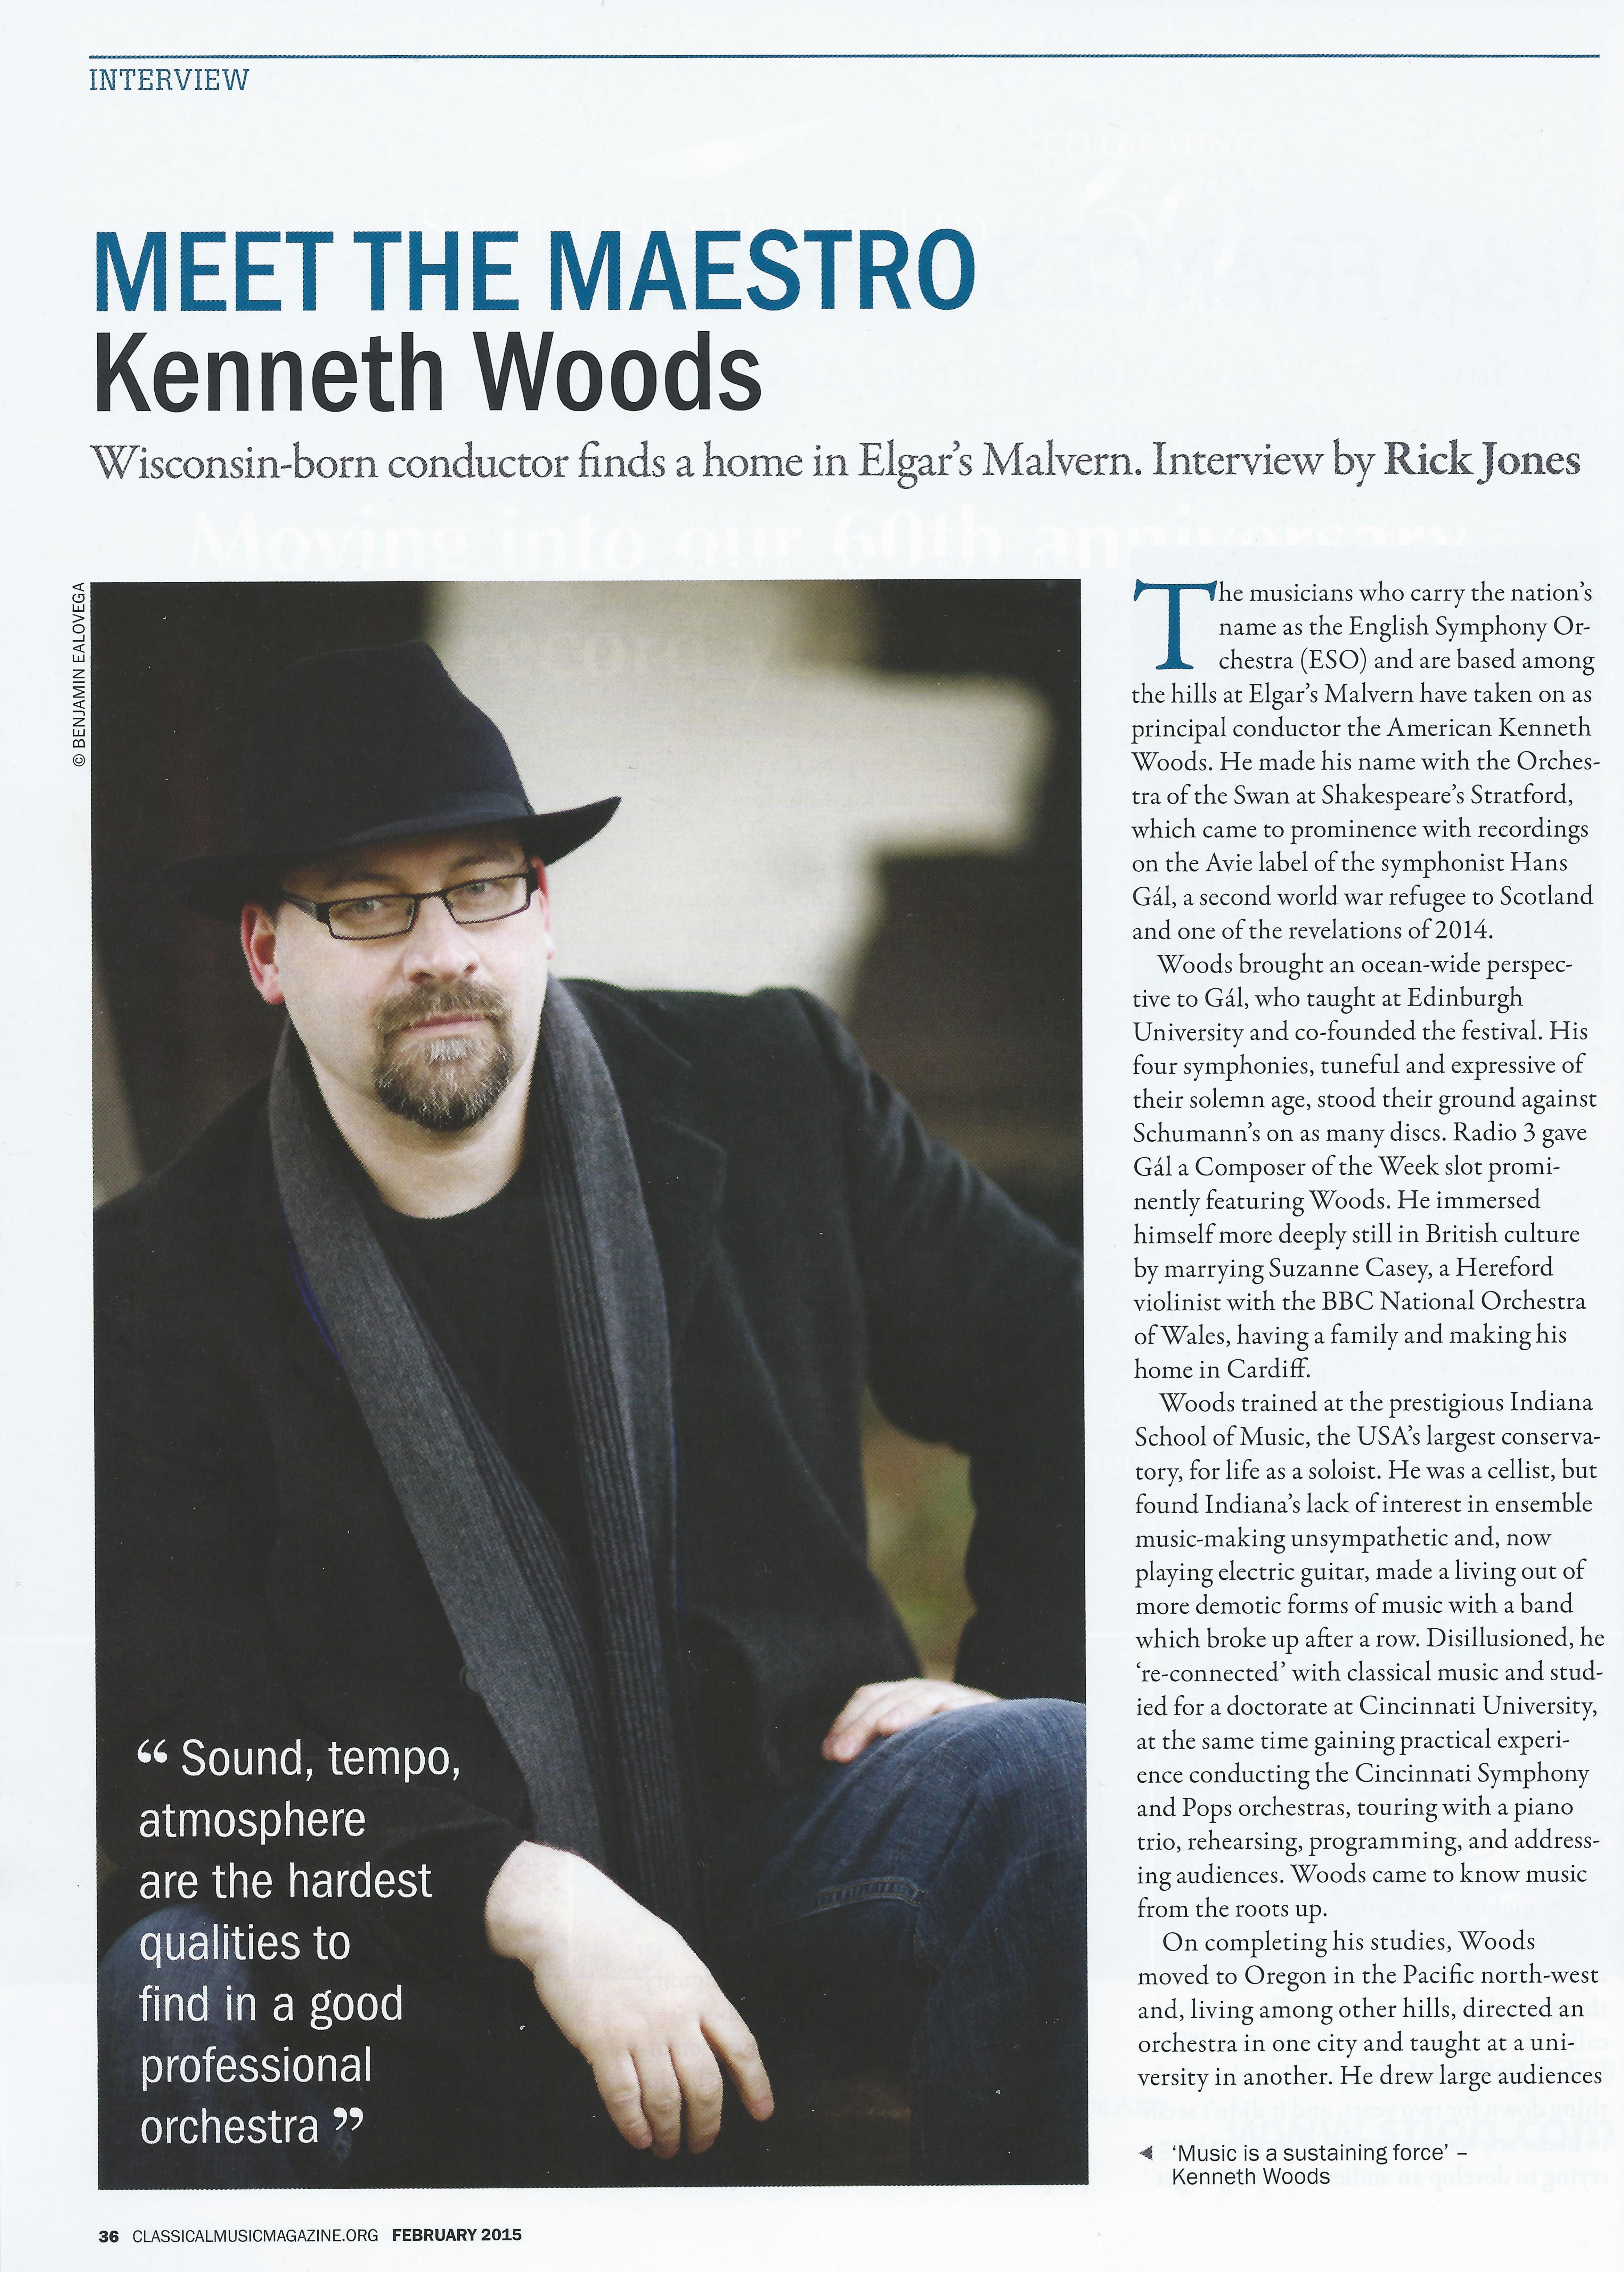 Classical Music Magazine- Meet the Maestro (KW)